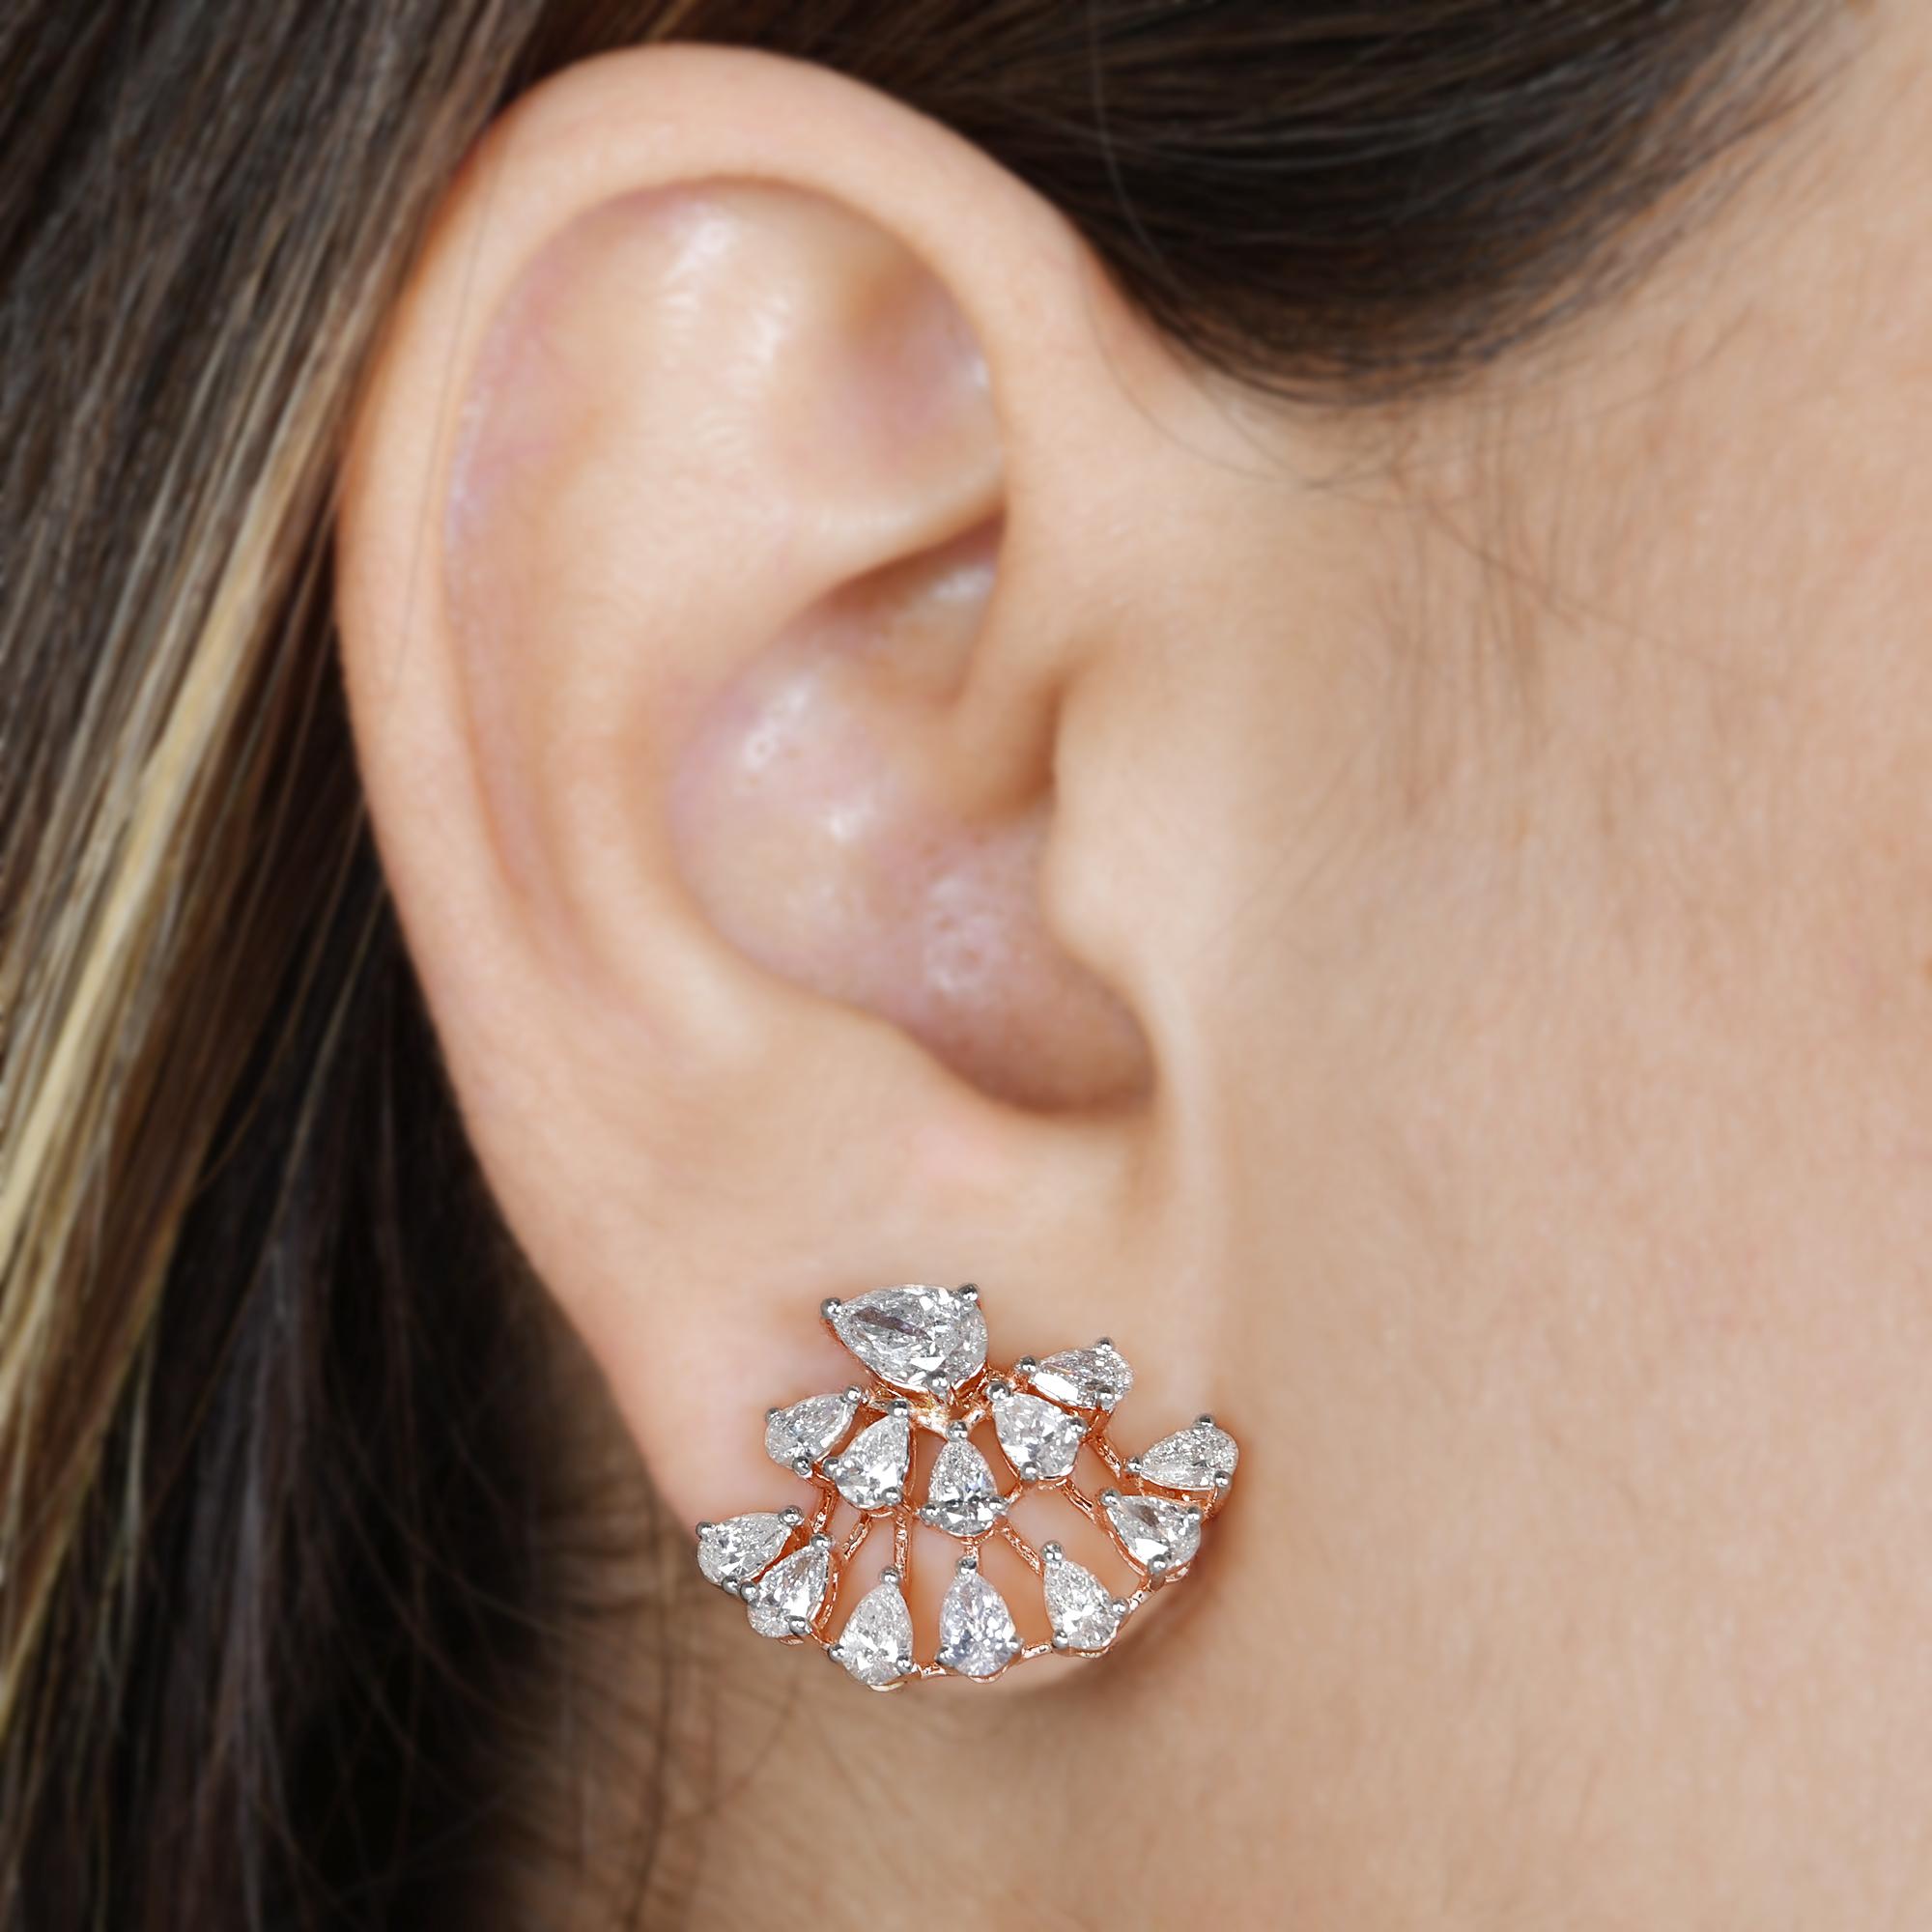 Pear Cut 3.10 Carat Pear Shape Diamond Stud Earrings Solid 14k Rose Gold Handmade Jewelry For Sale